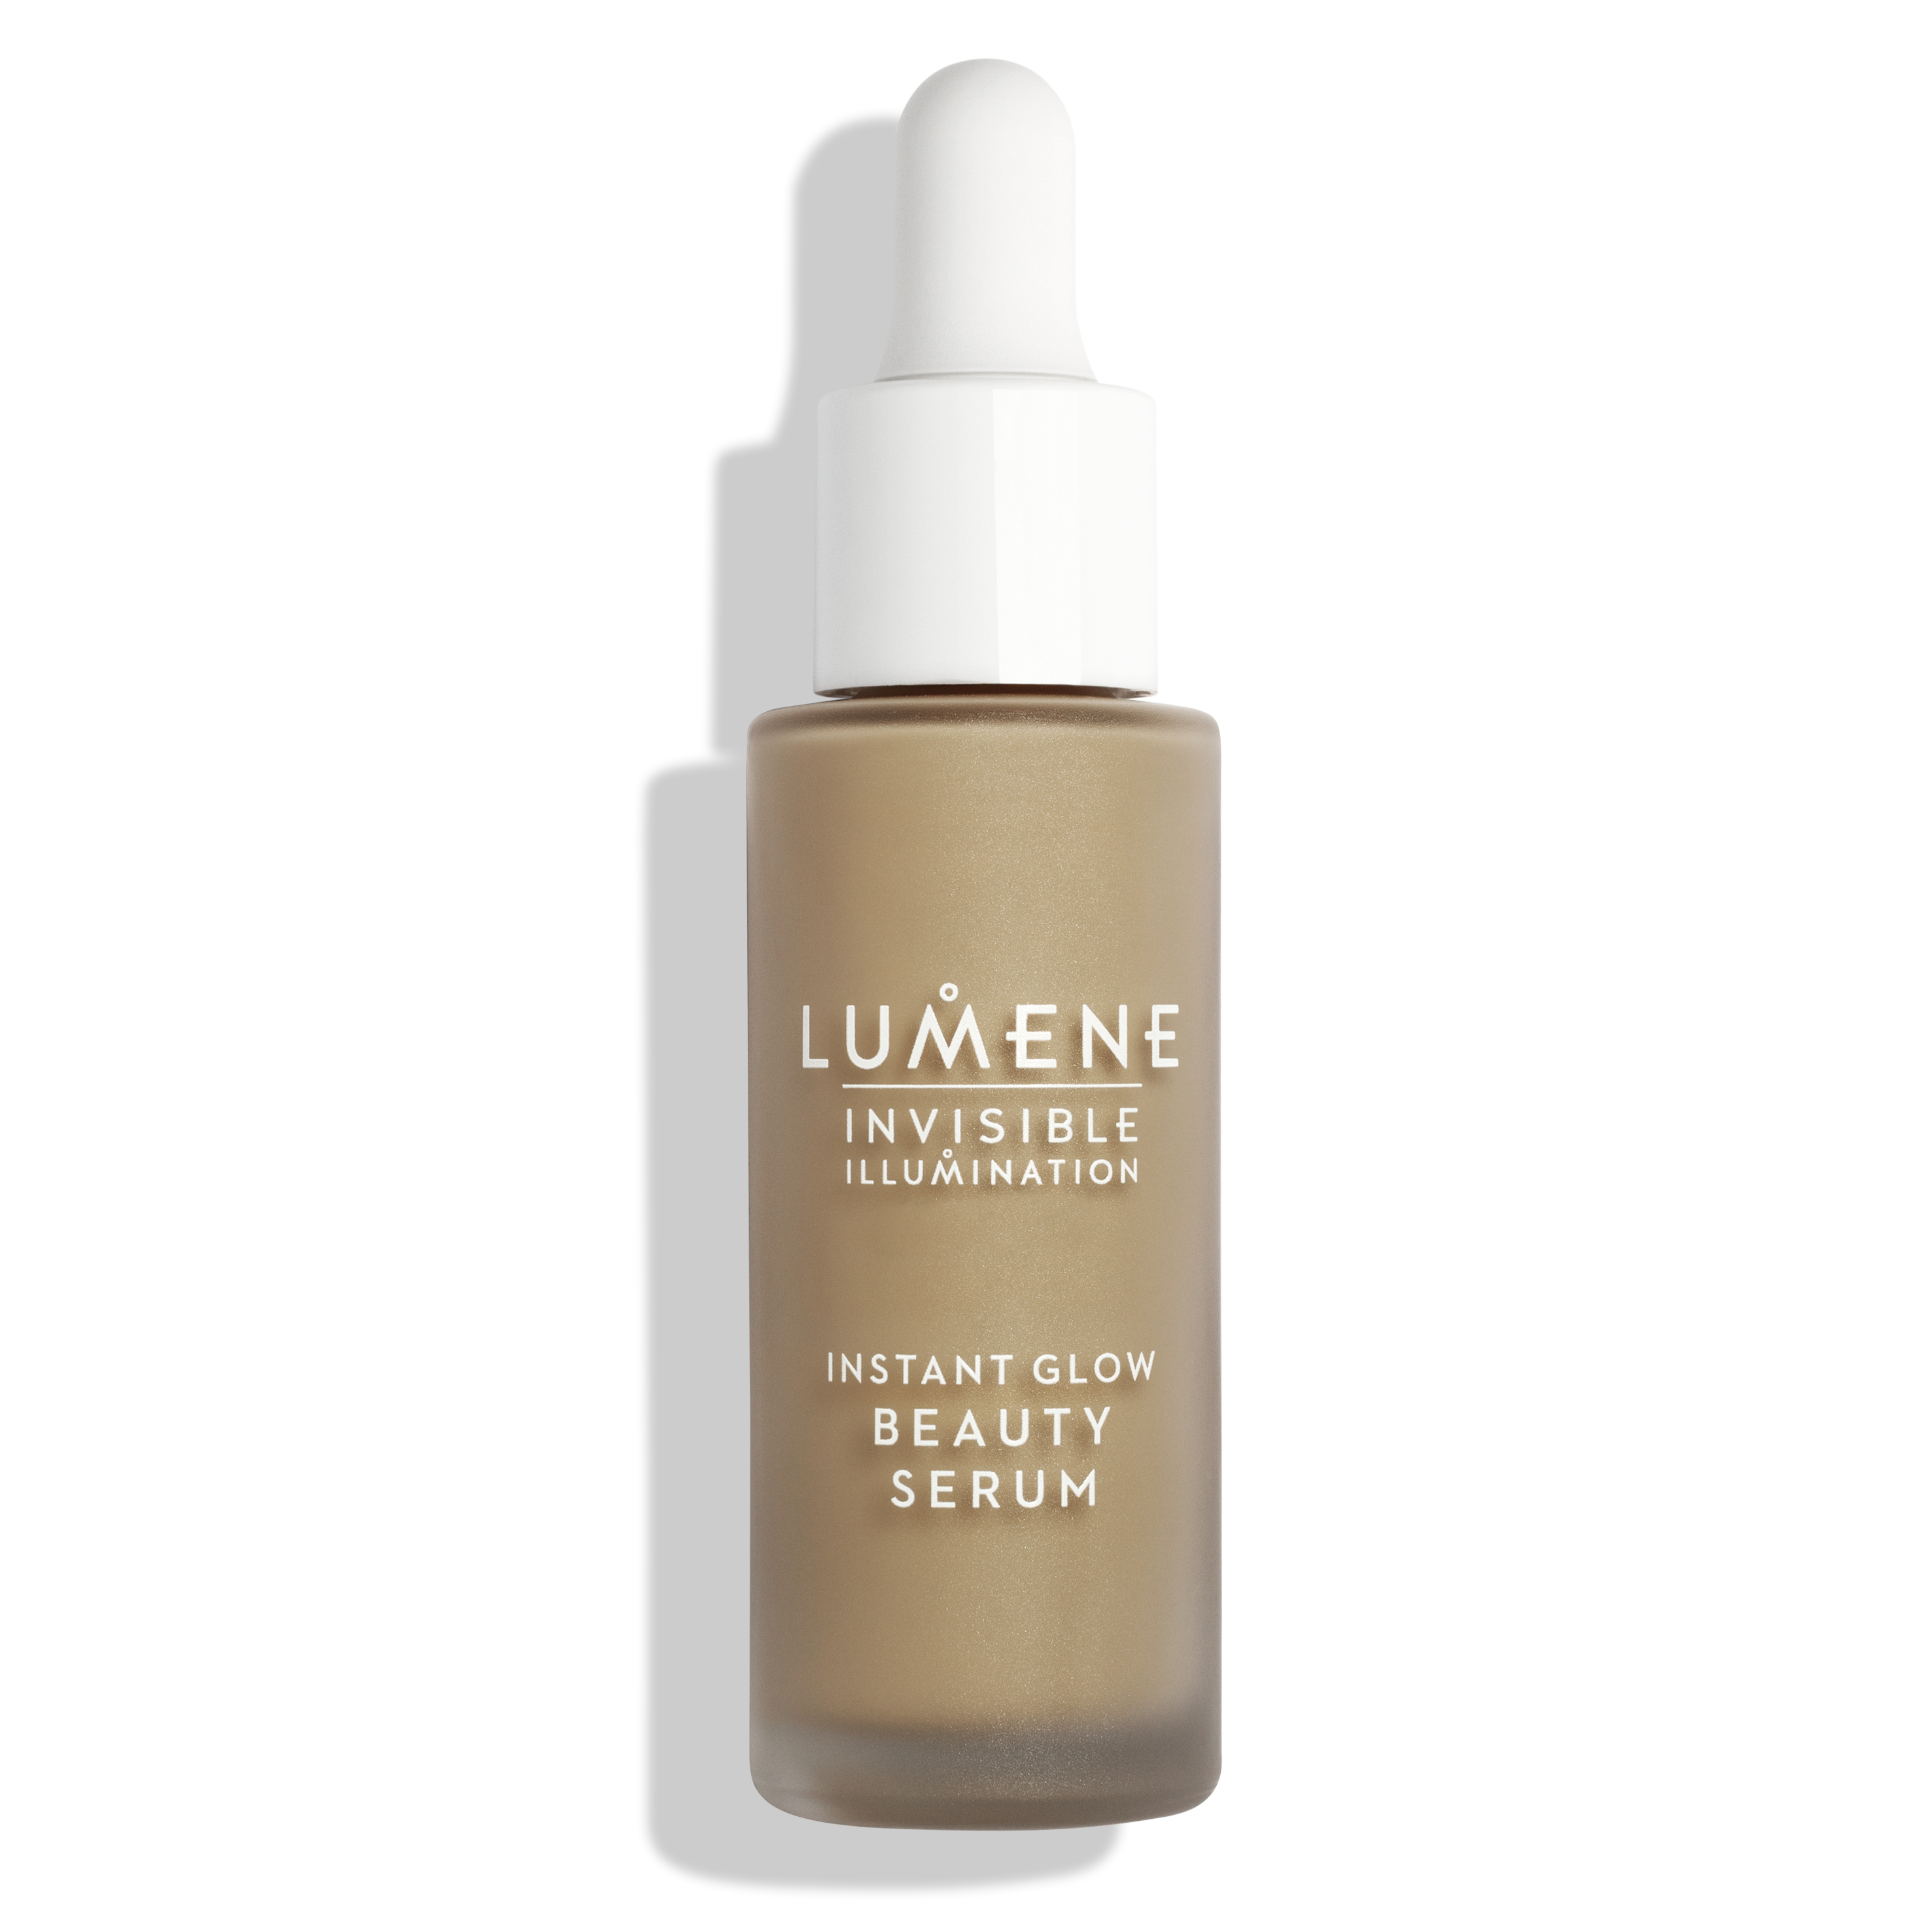 Lumene Invisible Illumination Instant Glow Beauty Serum, Universal Tan, 30 ml